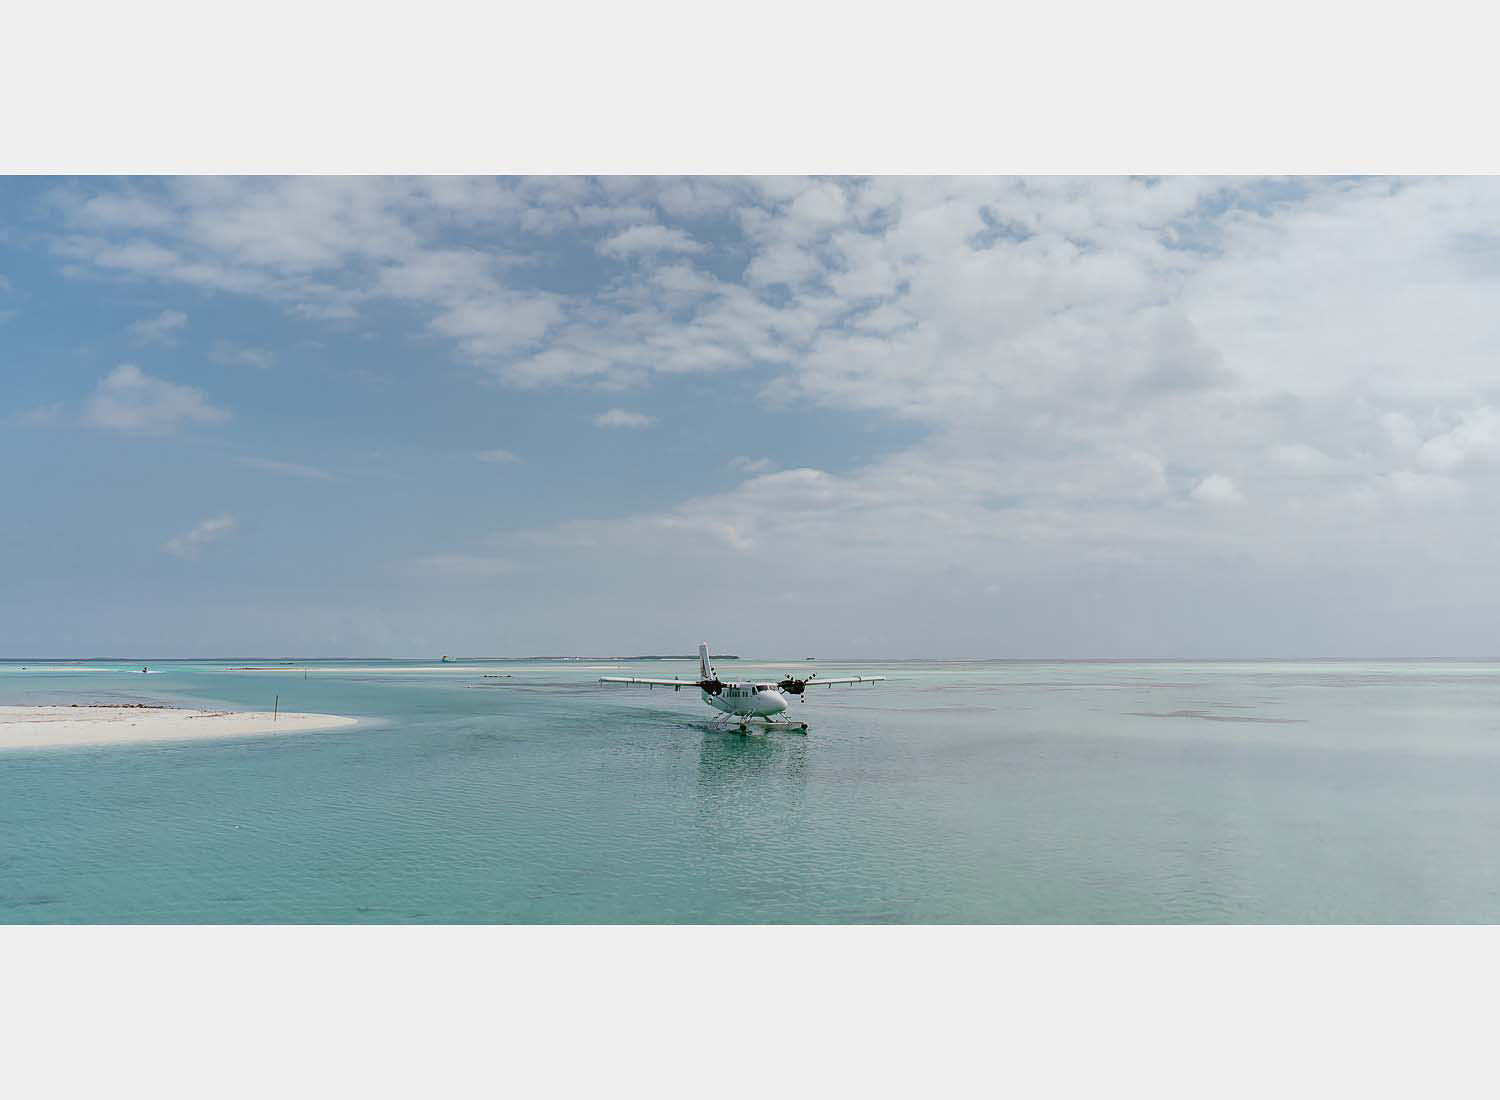 wedding photographer in maldives anniversary trip private sandbank affairs canoe dugout